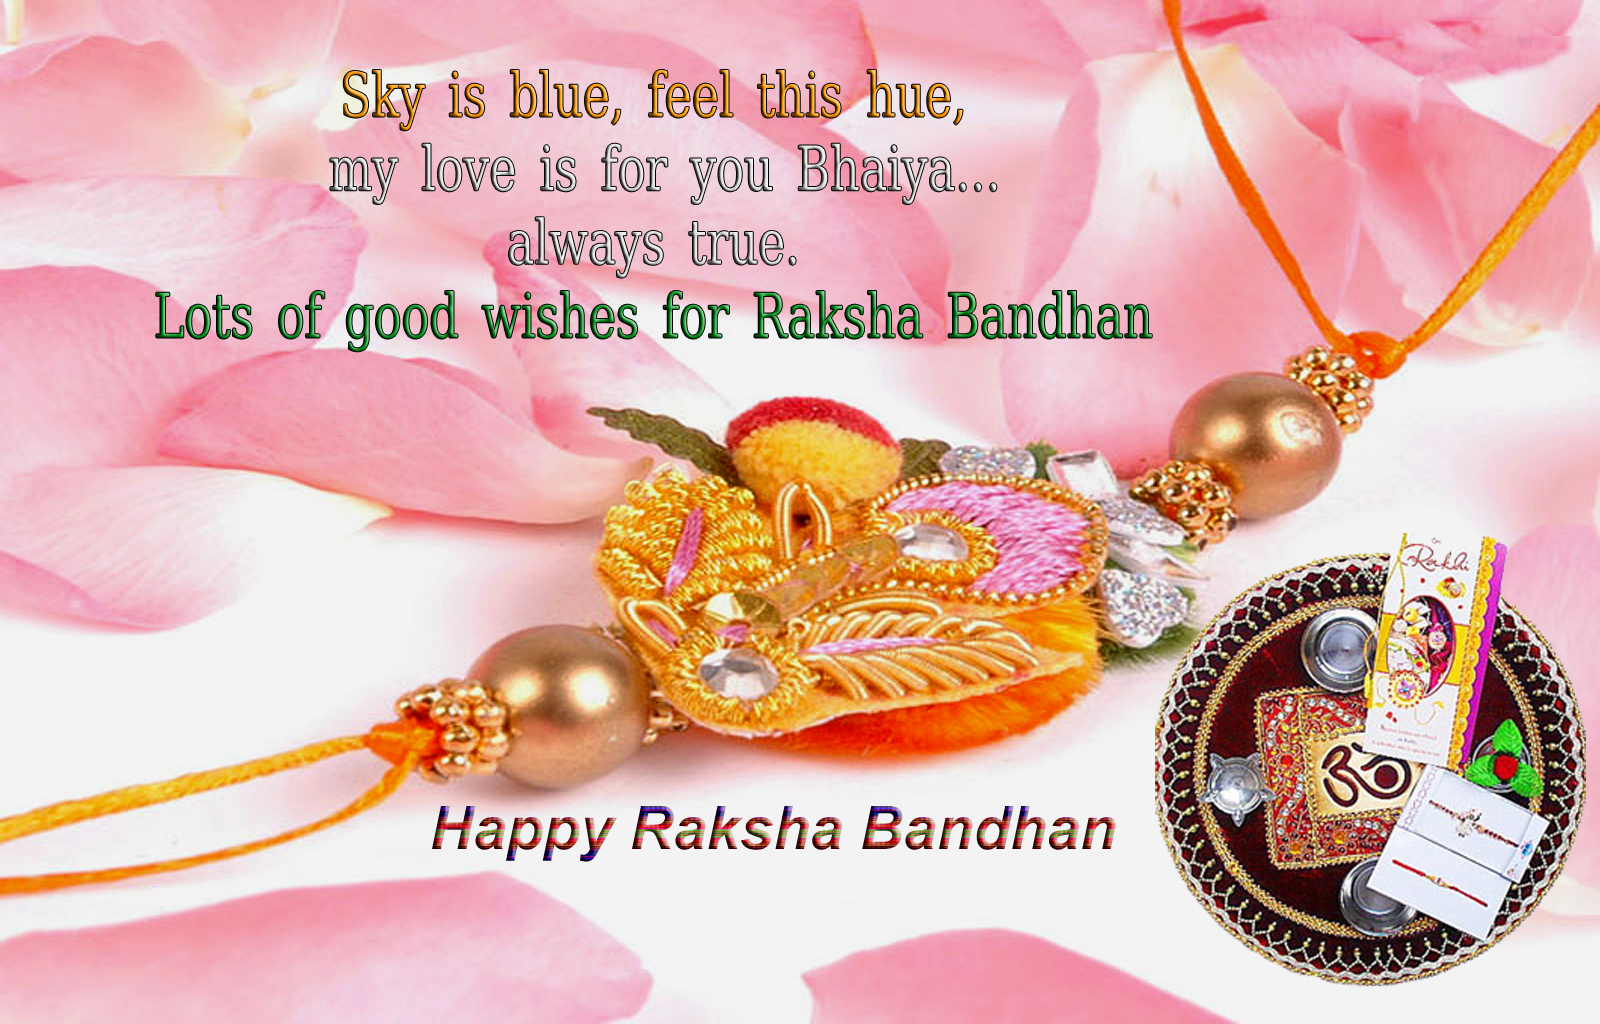 Happy Raksha Bandhan HD Images & Wallpapers - Free Download - Techicy